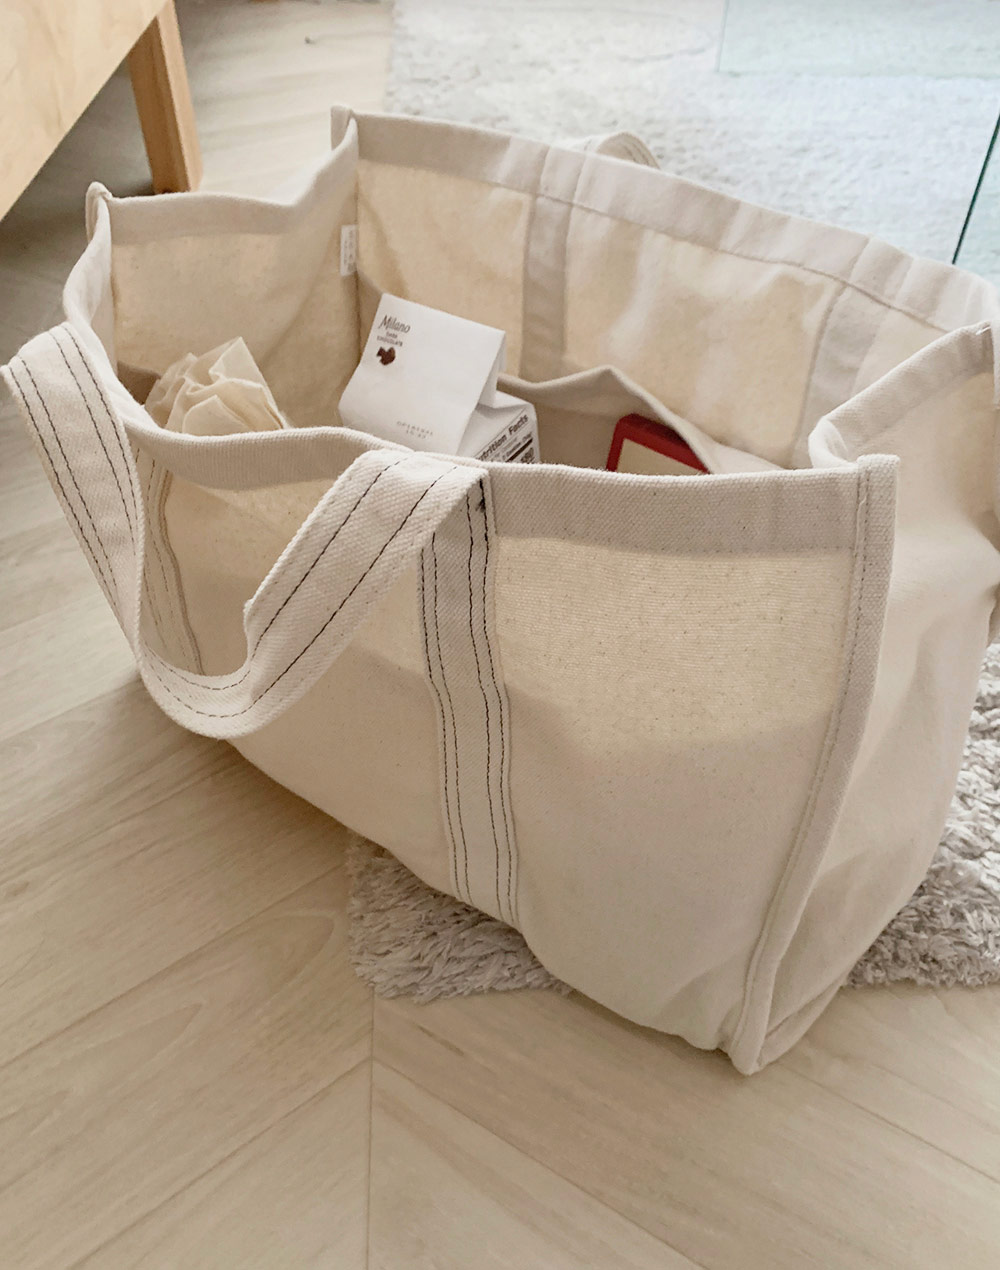 Canvas tote bag・d275033（バッグ/バッグ）| maikooe | 東京ガールズマーケット